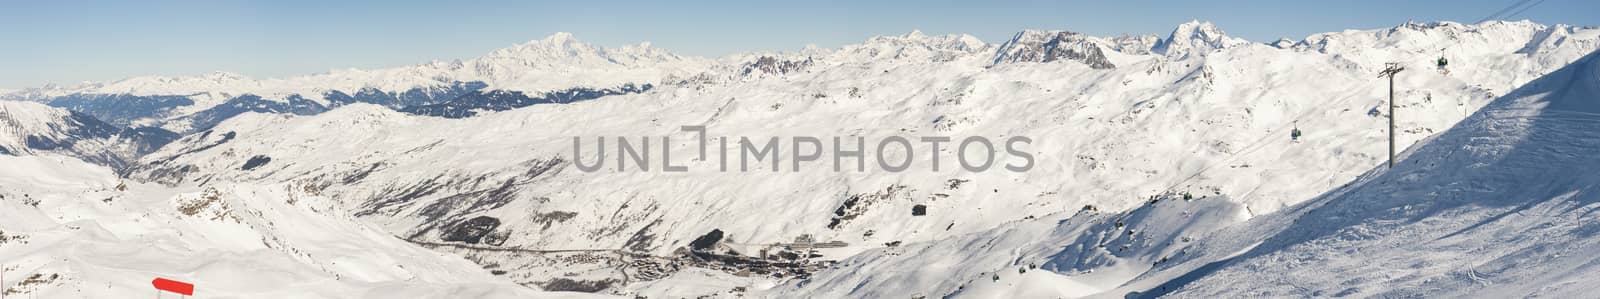 View down a snowy piste in alpine mountain valley with ski resort village